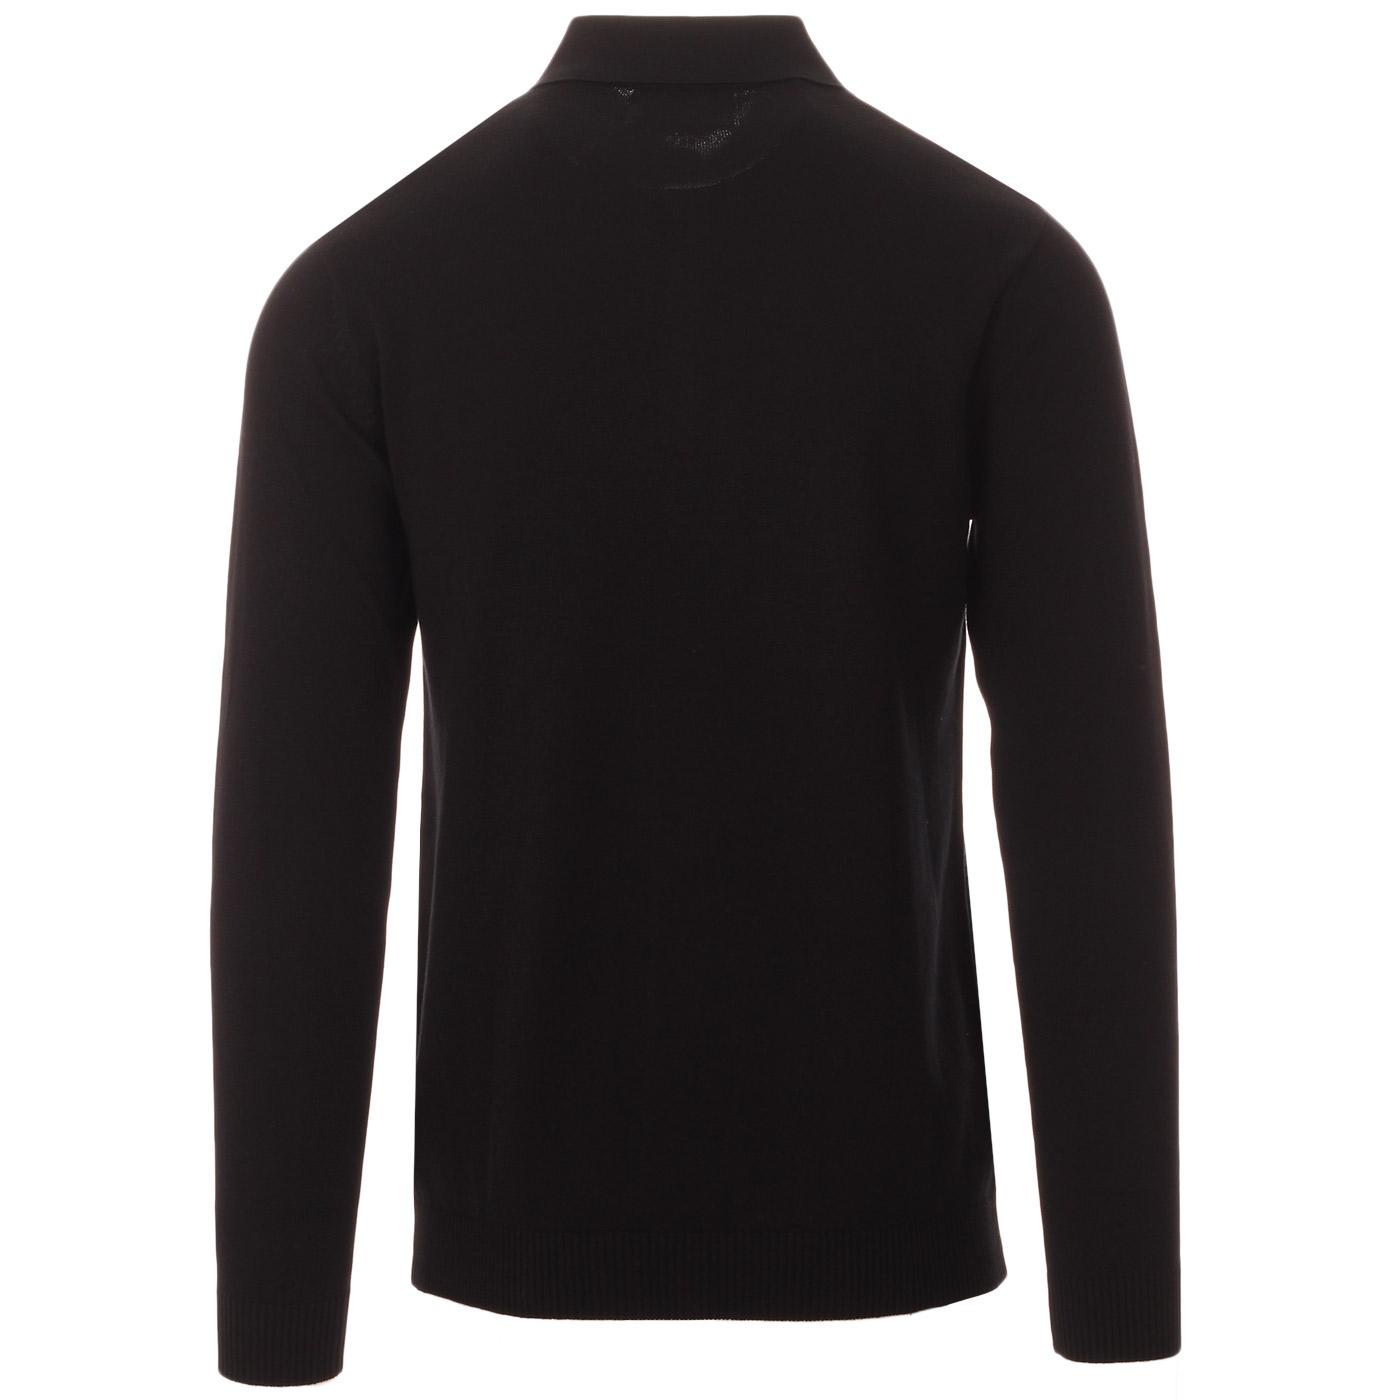 MADCAP ENGLAND Brando 60s Mod Knit Polo Shirt in Black